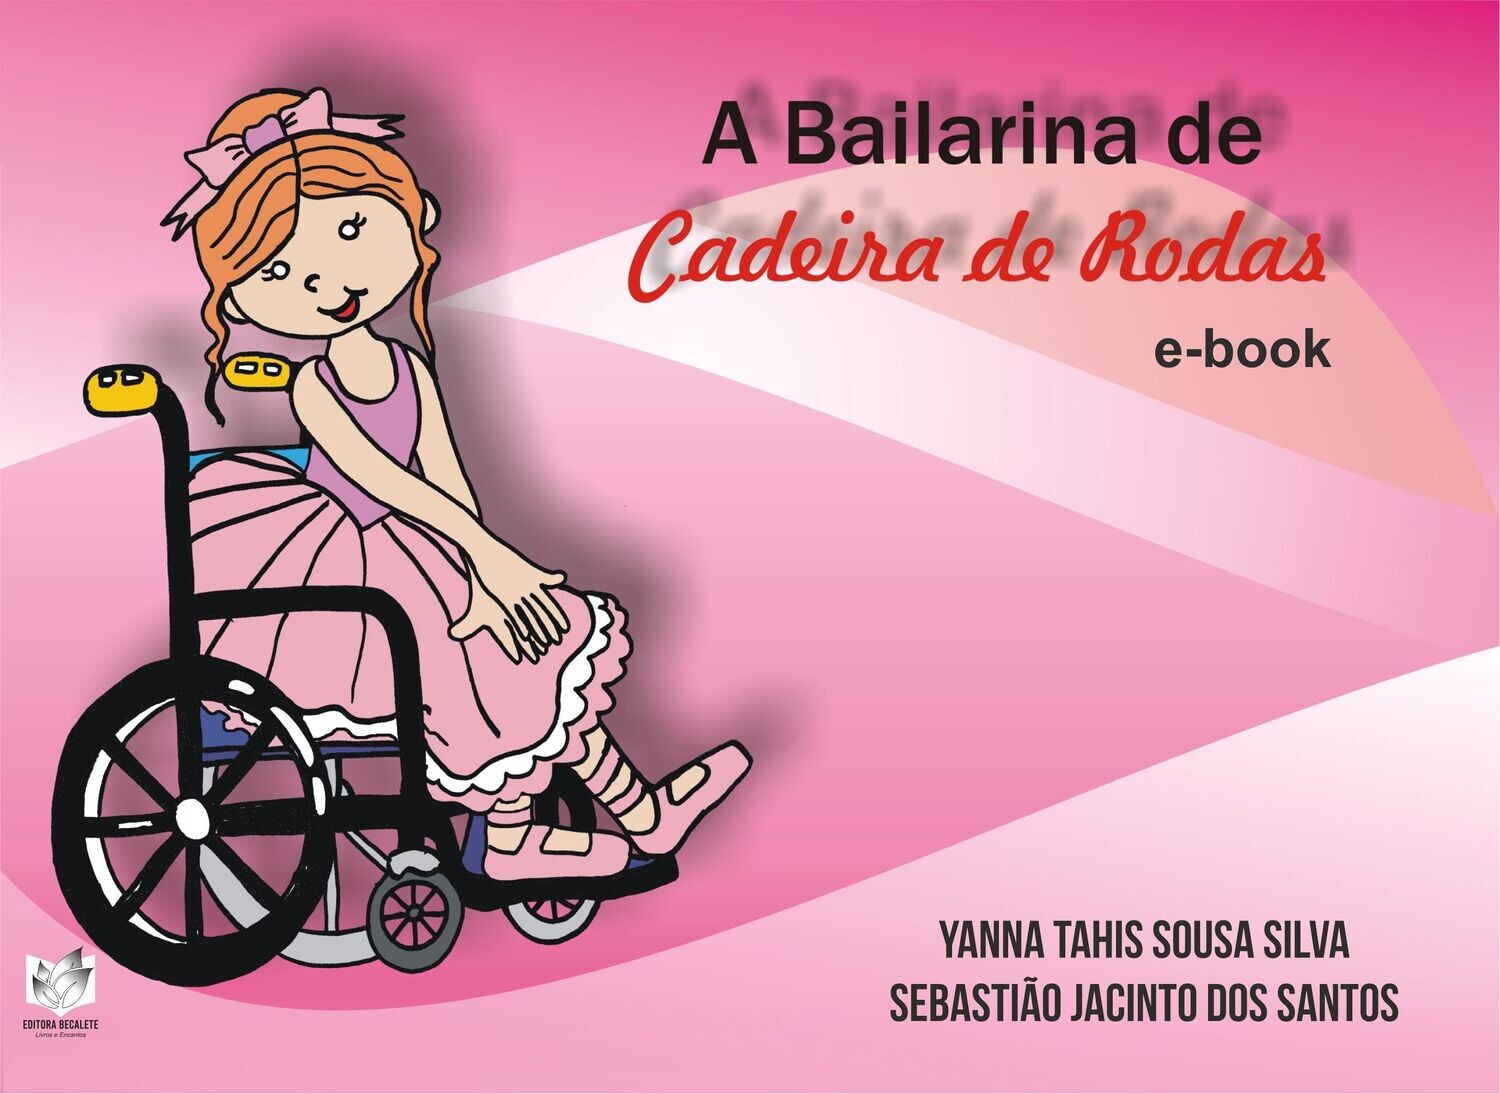 A bailarina de cadeira de rodas